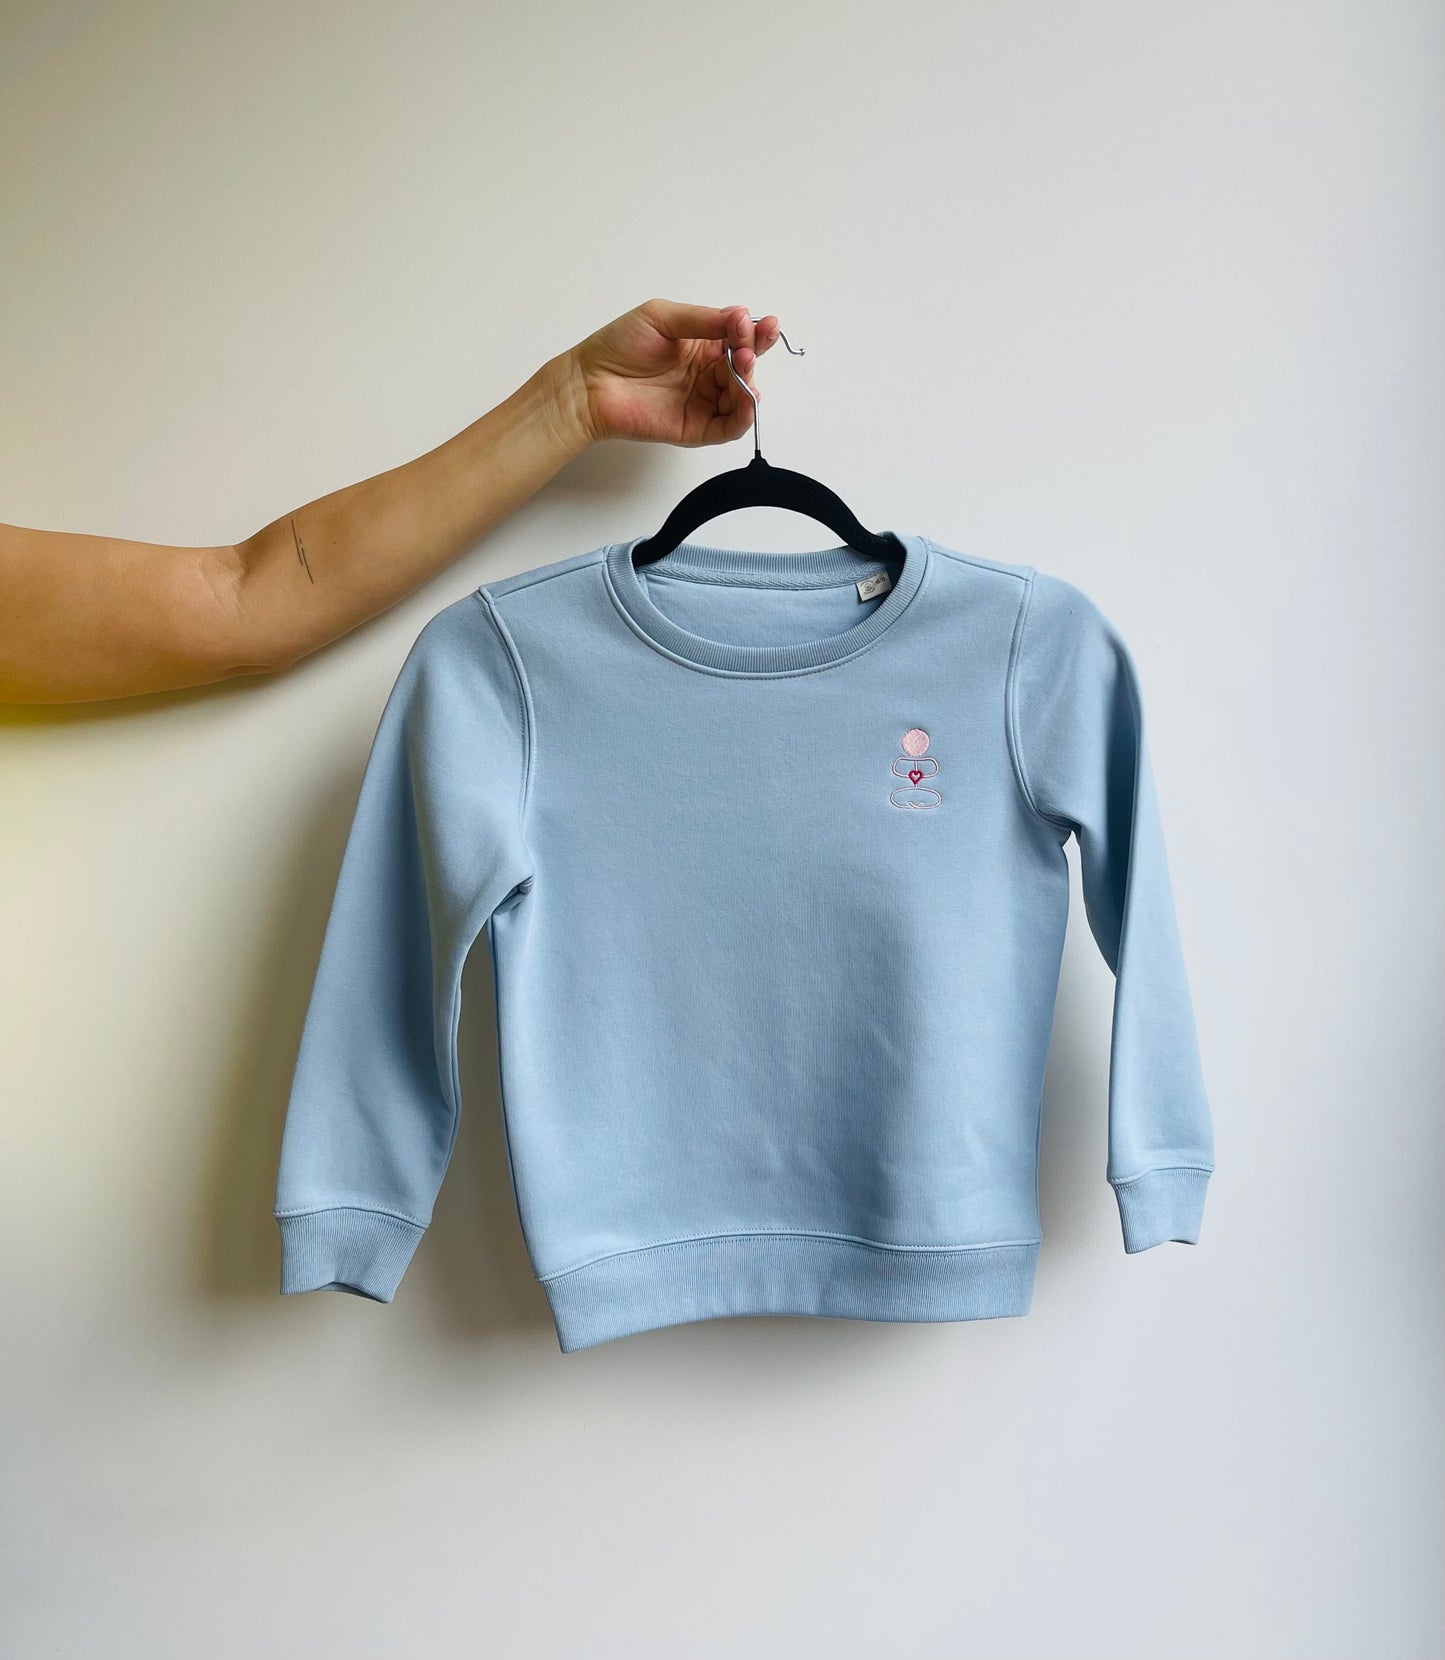 Unisex kids Sweater - Easy